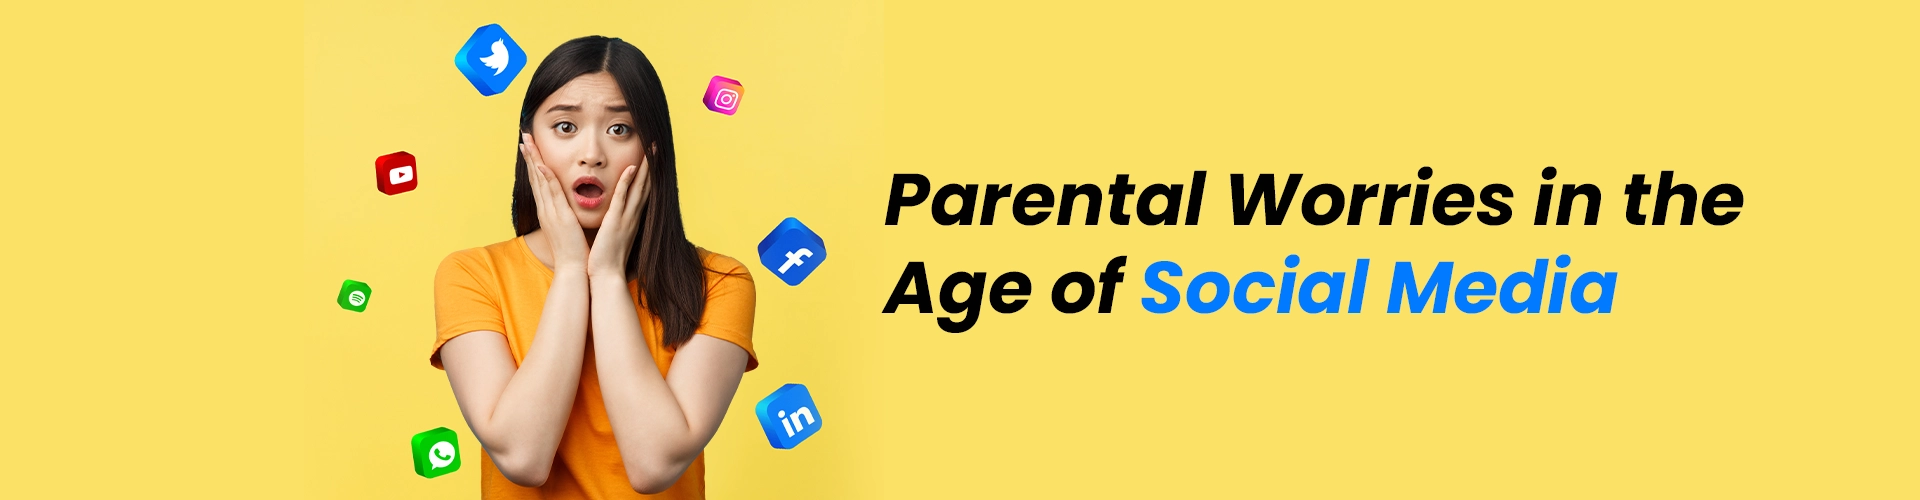 Parental Worries in the Age of Social Media